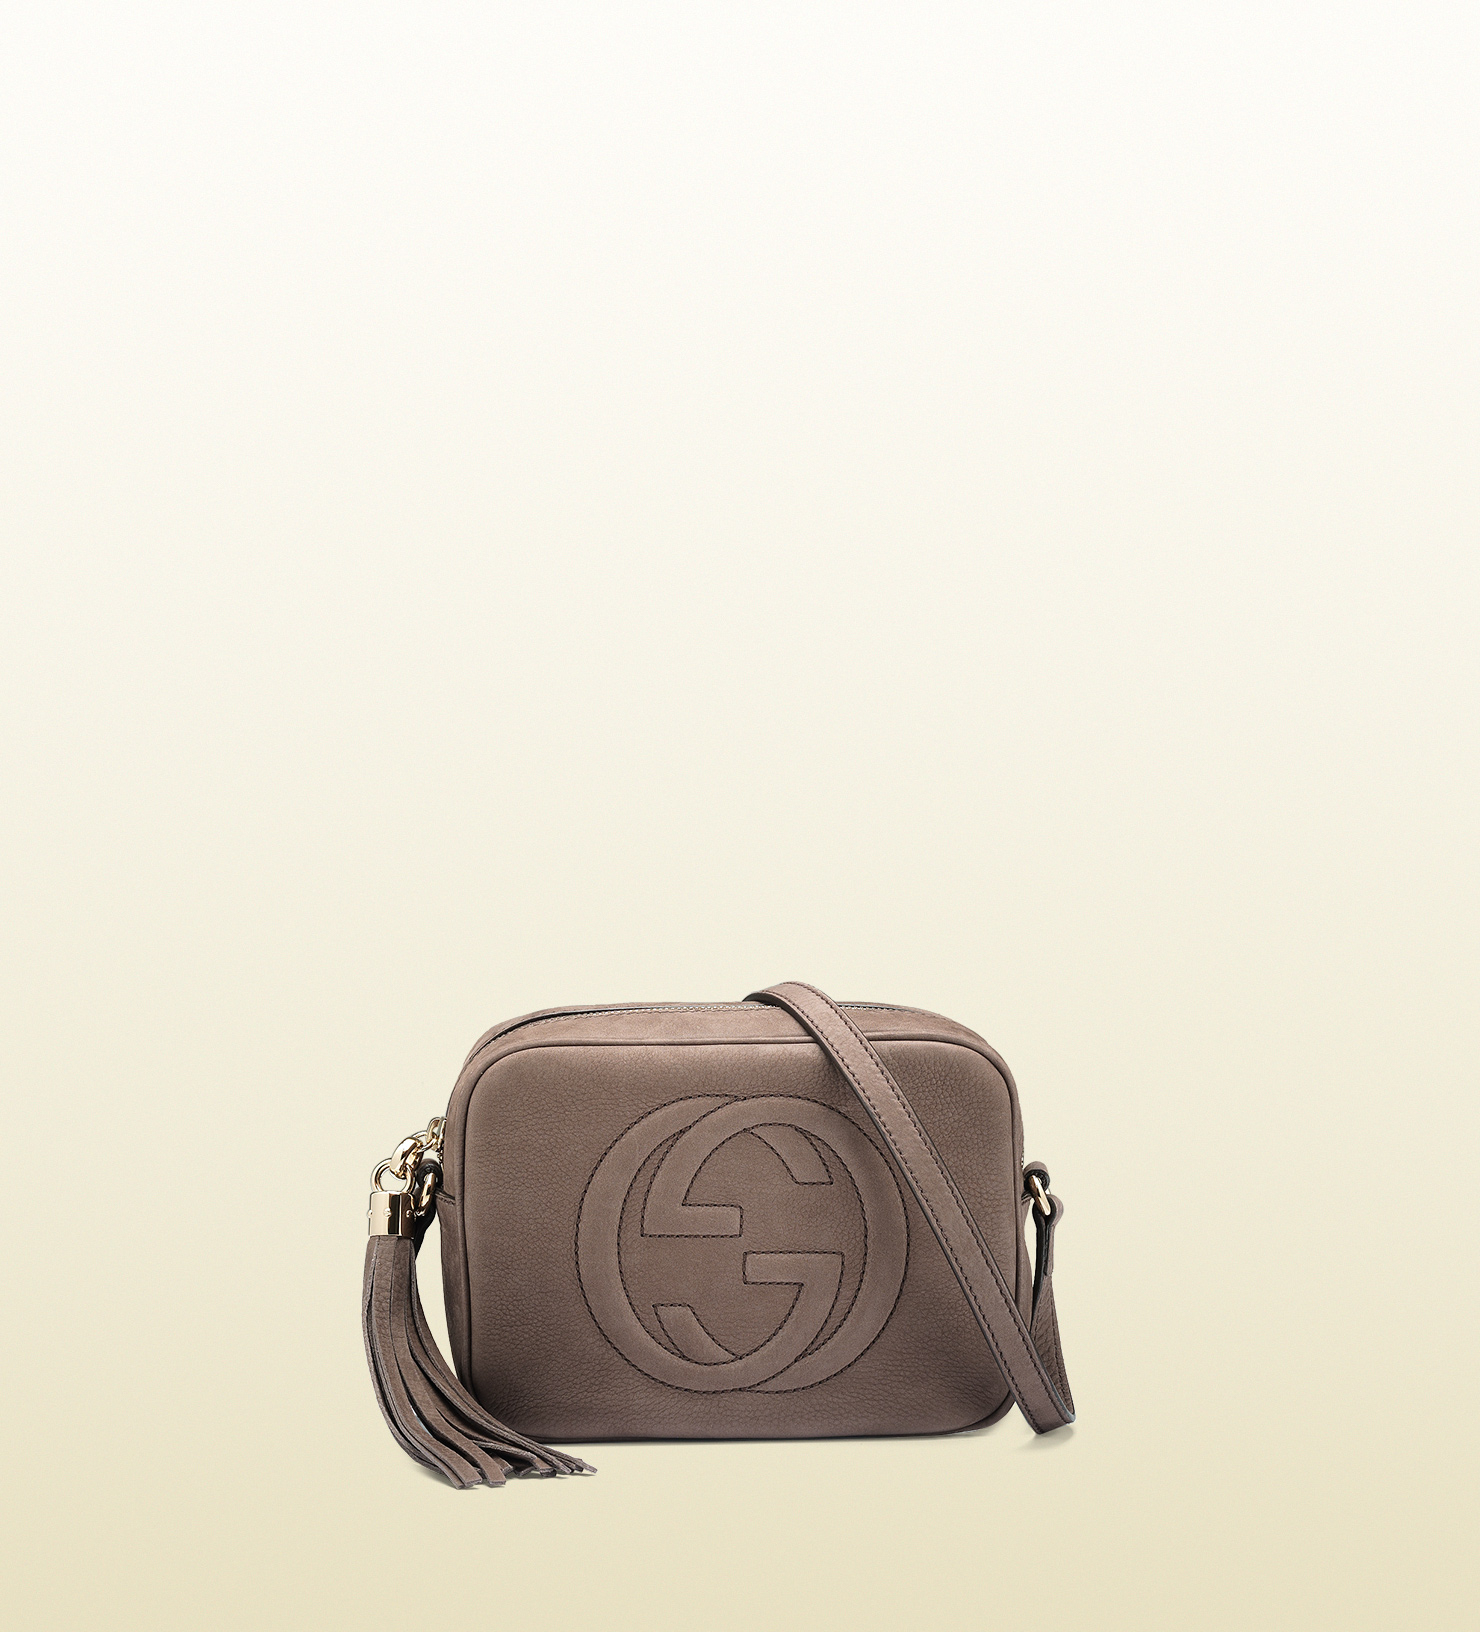 Gucci Beige Leather Small Soho Disco Shoulder Bag